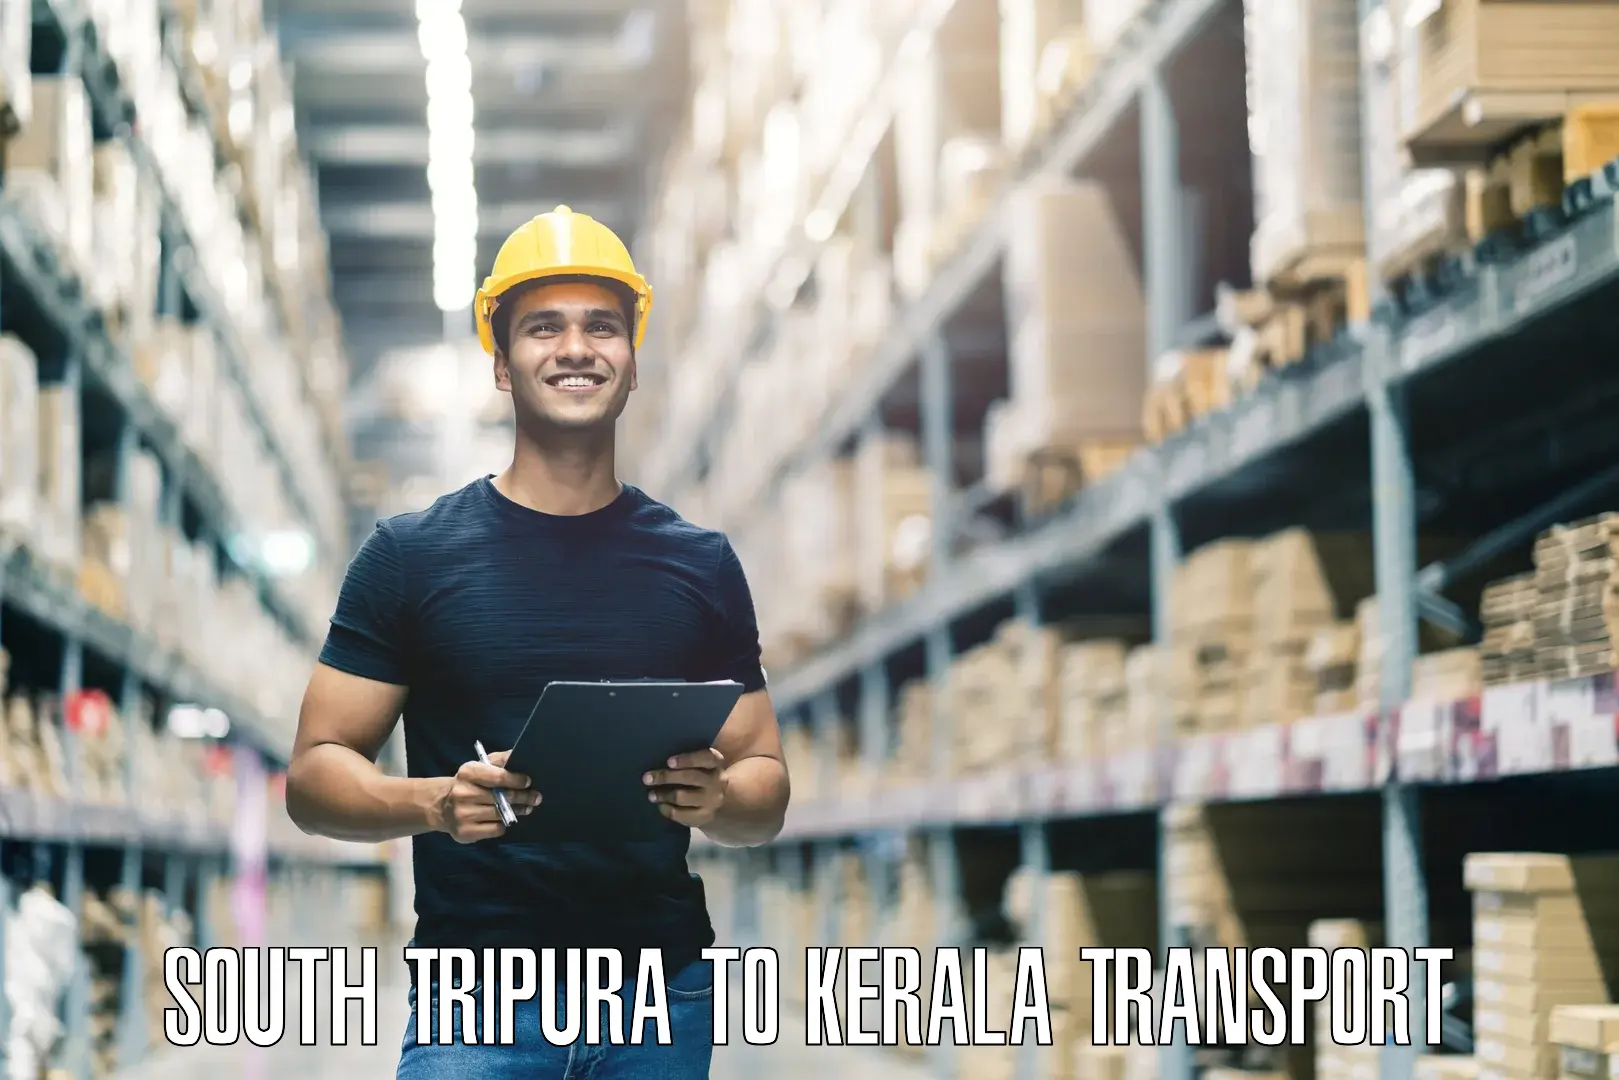 Pick up transport service South Tripura to Kerala